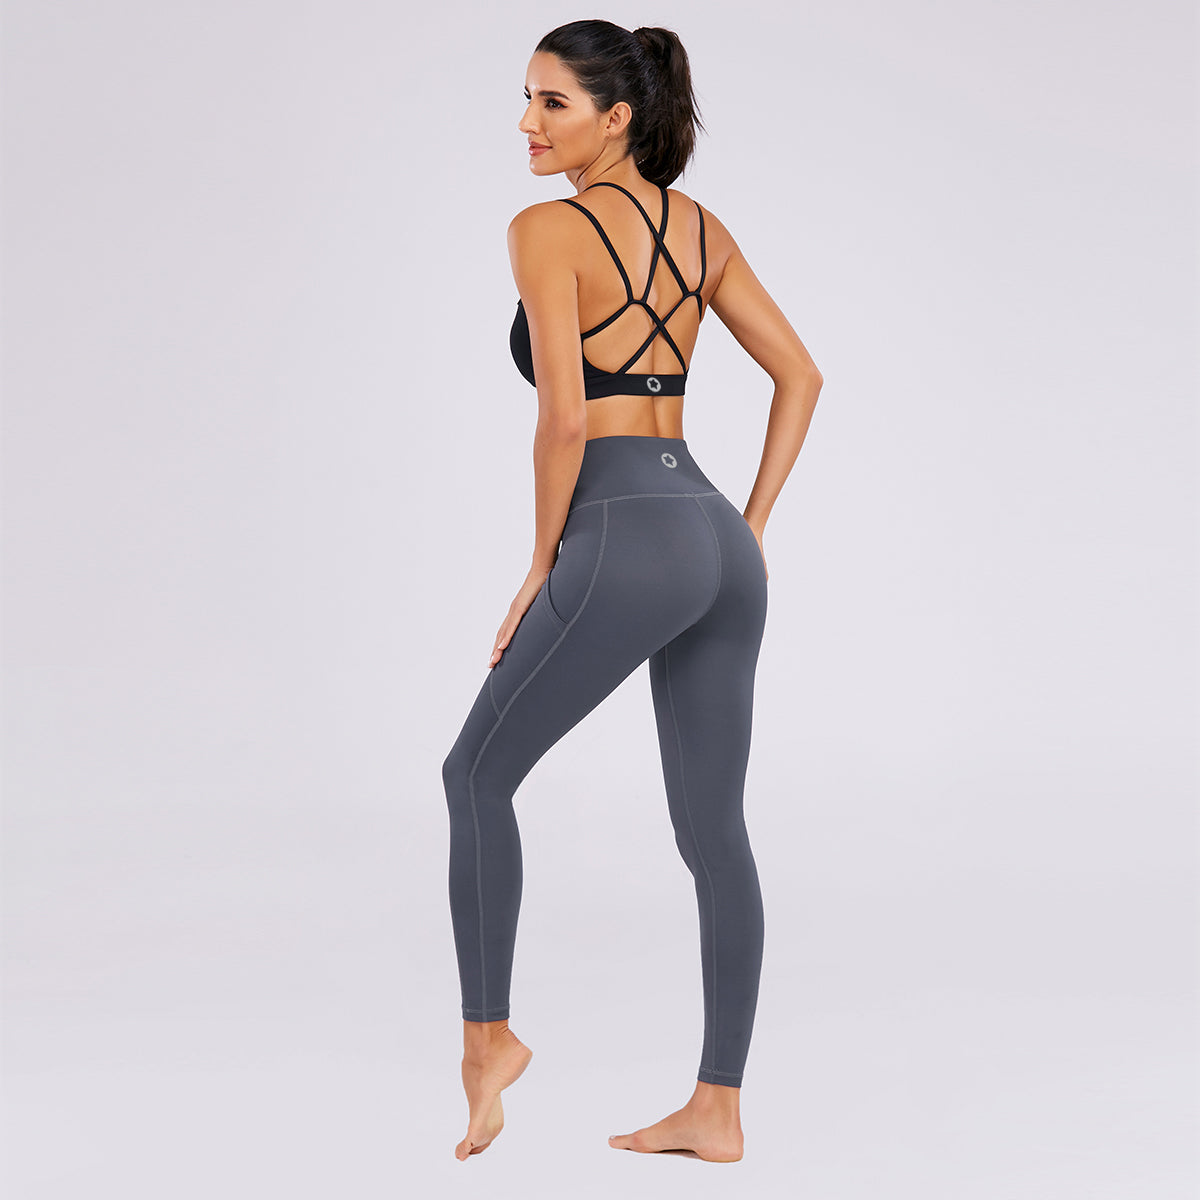 Nabtos Women Workout Running Yoga Fitness Gym Shorts Side Inner pocket